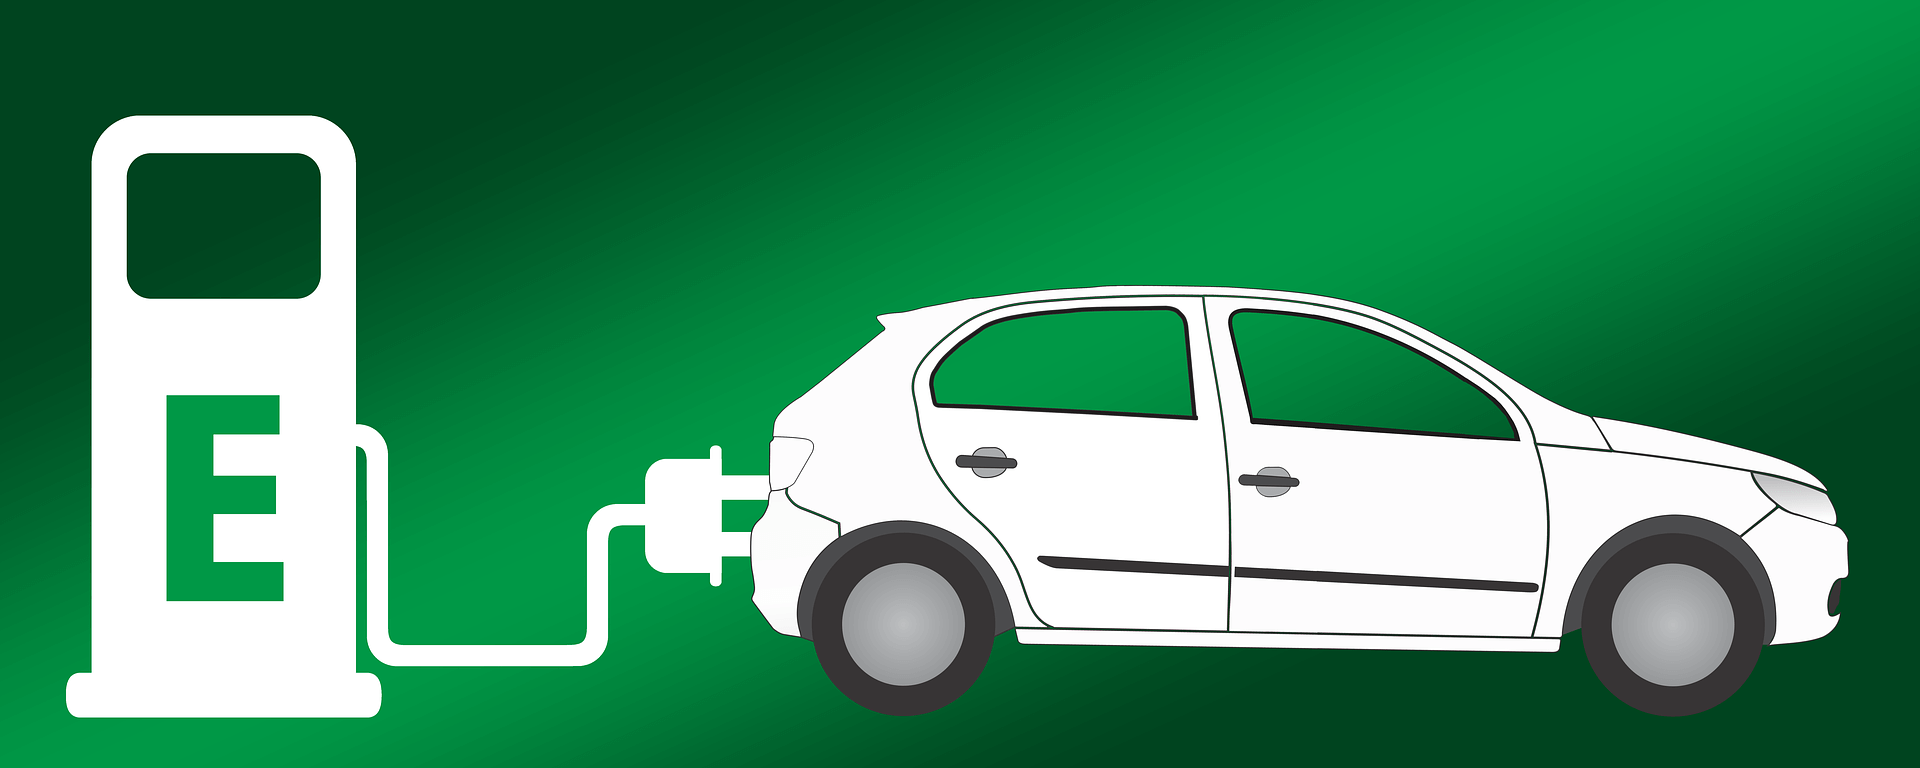 electric car pix